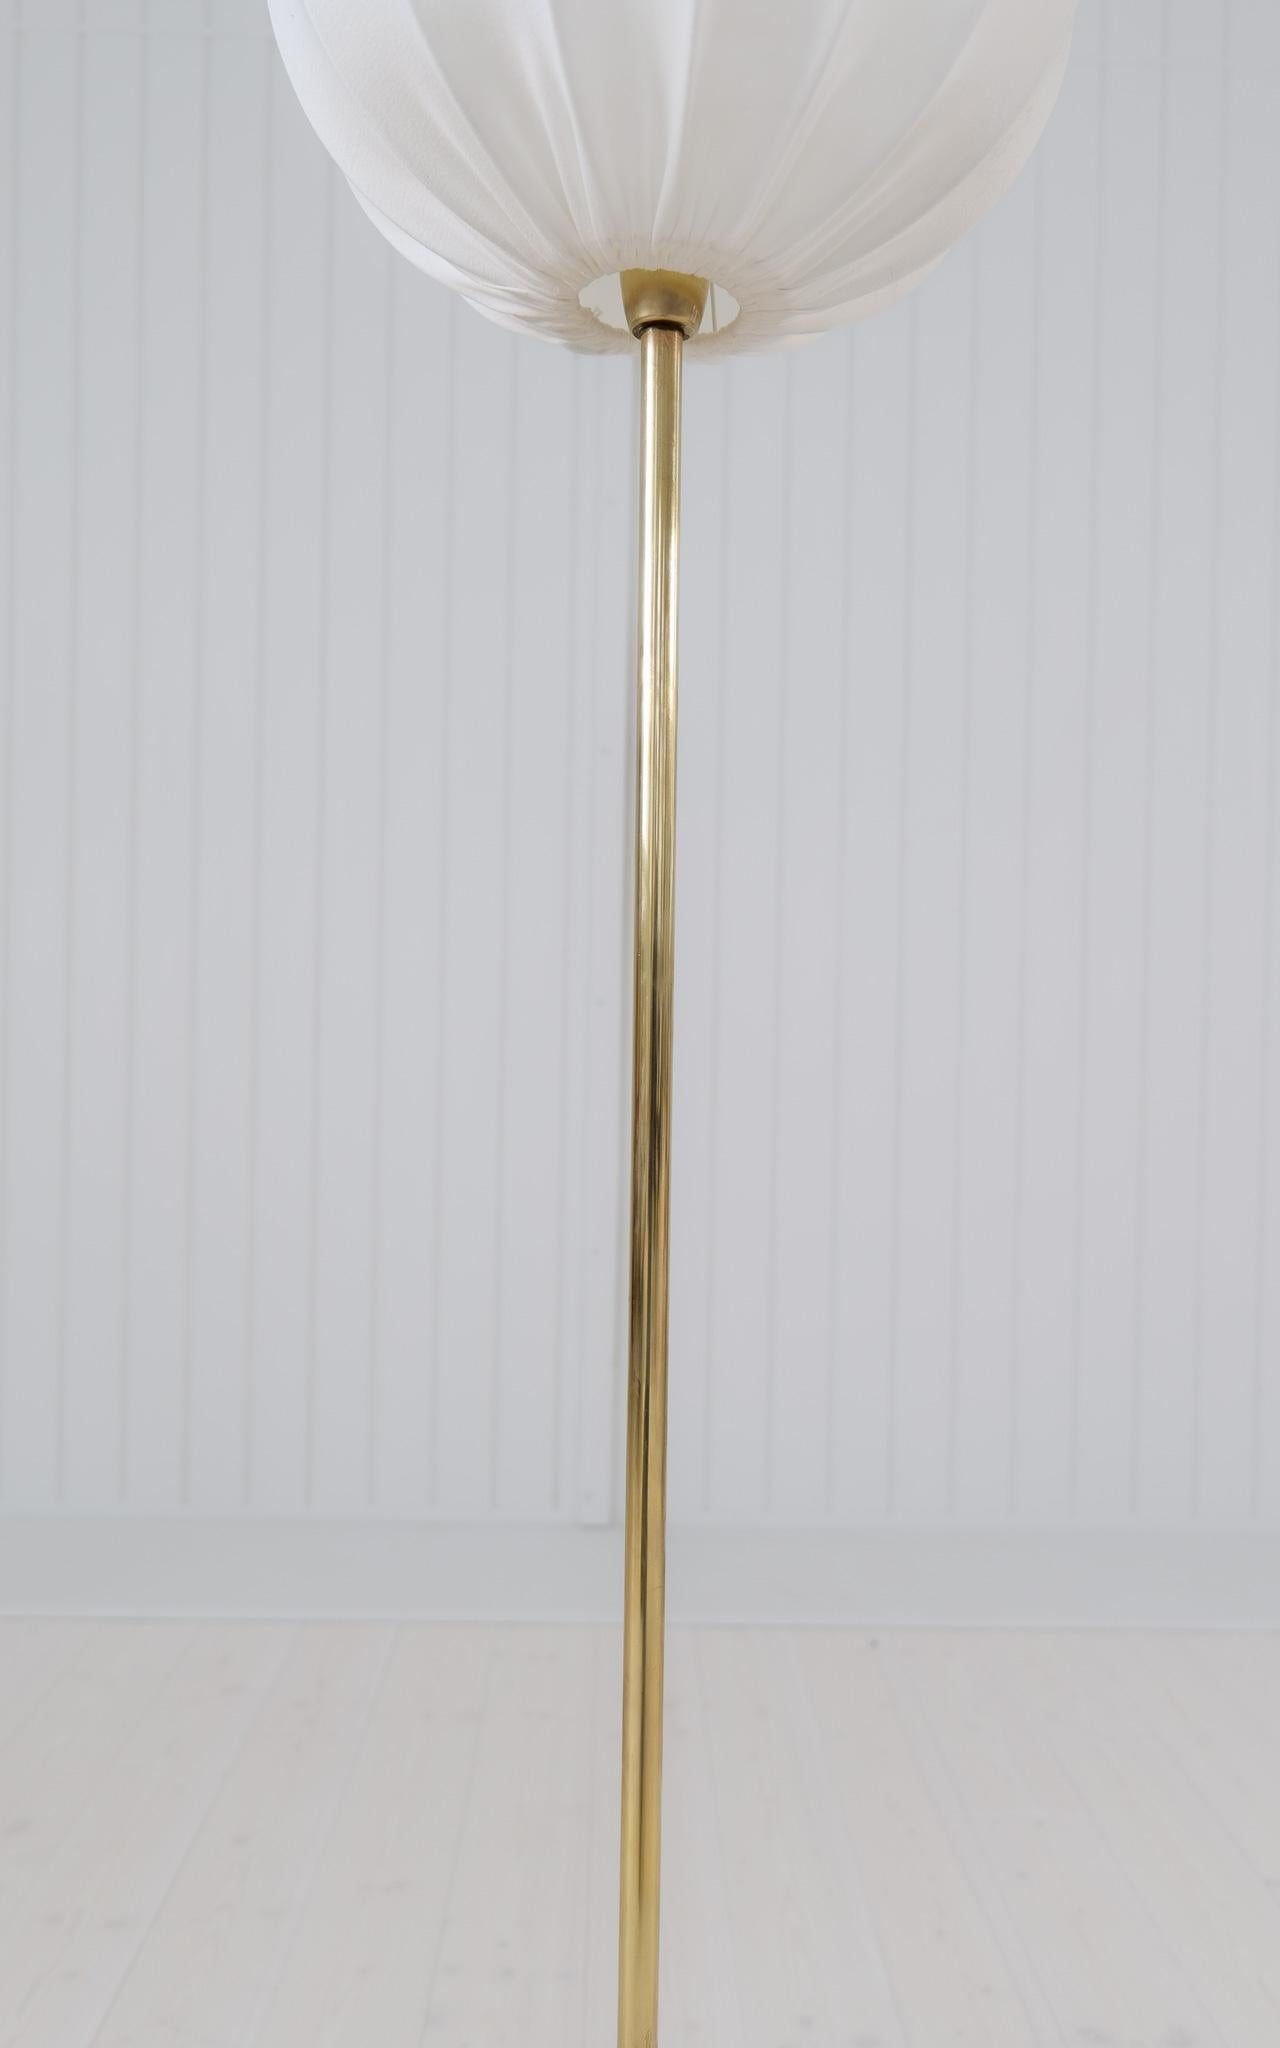 Midcentury Modern Trumpet Shaped Brass Floor Lamp, Sweden, 1960s For Sale 2